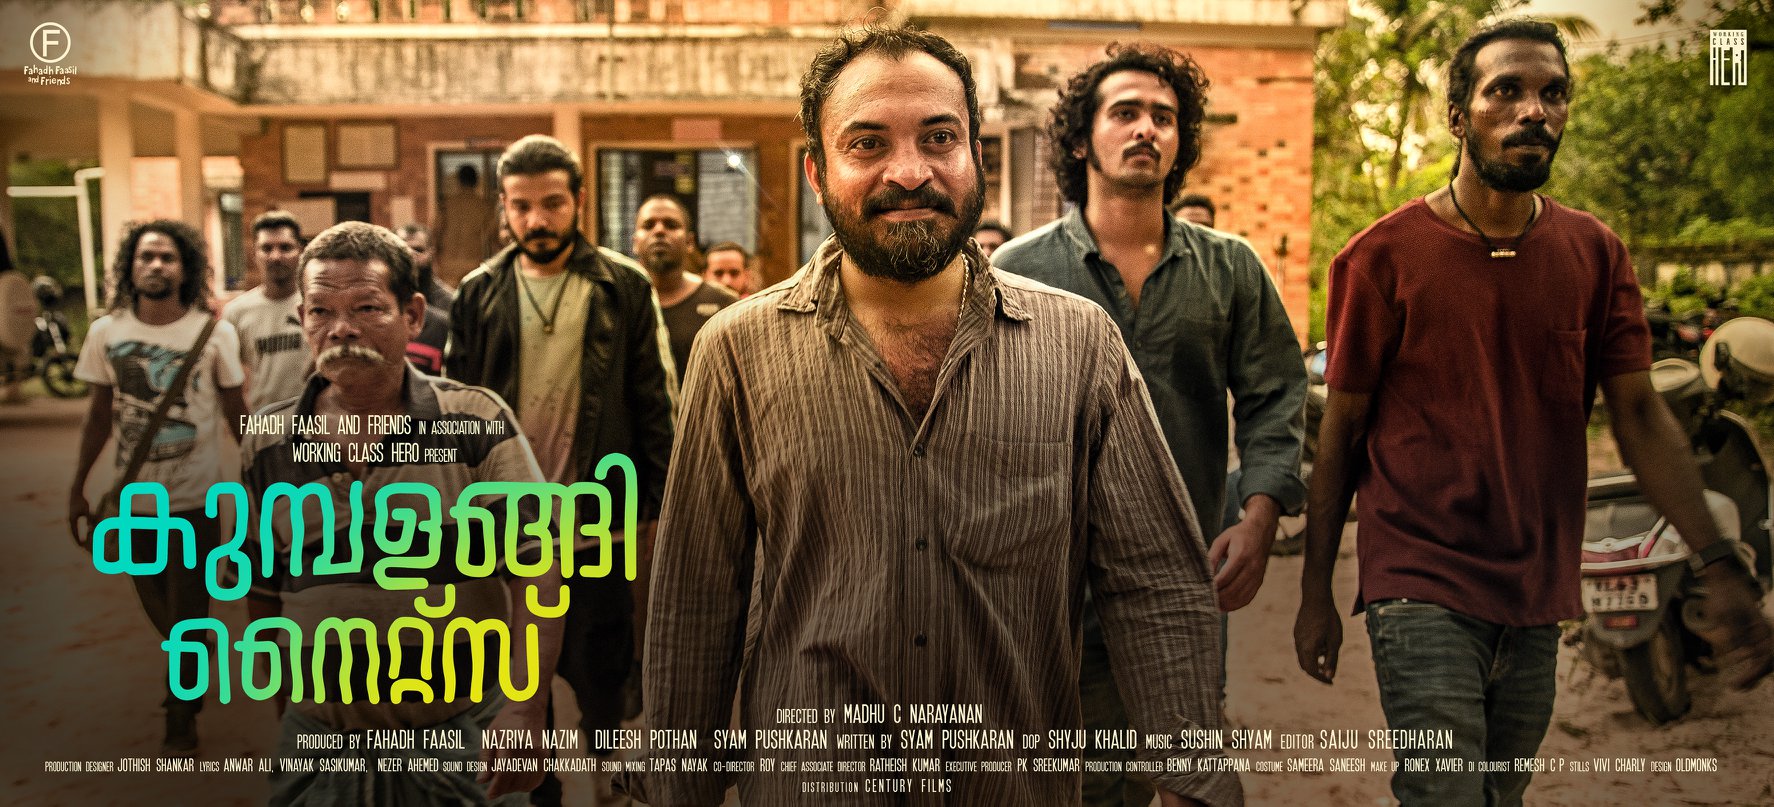 kumbalangi-nights-malayalam-movie-review-veeyen